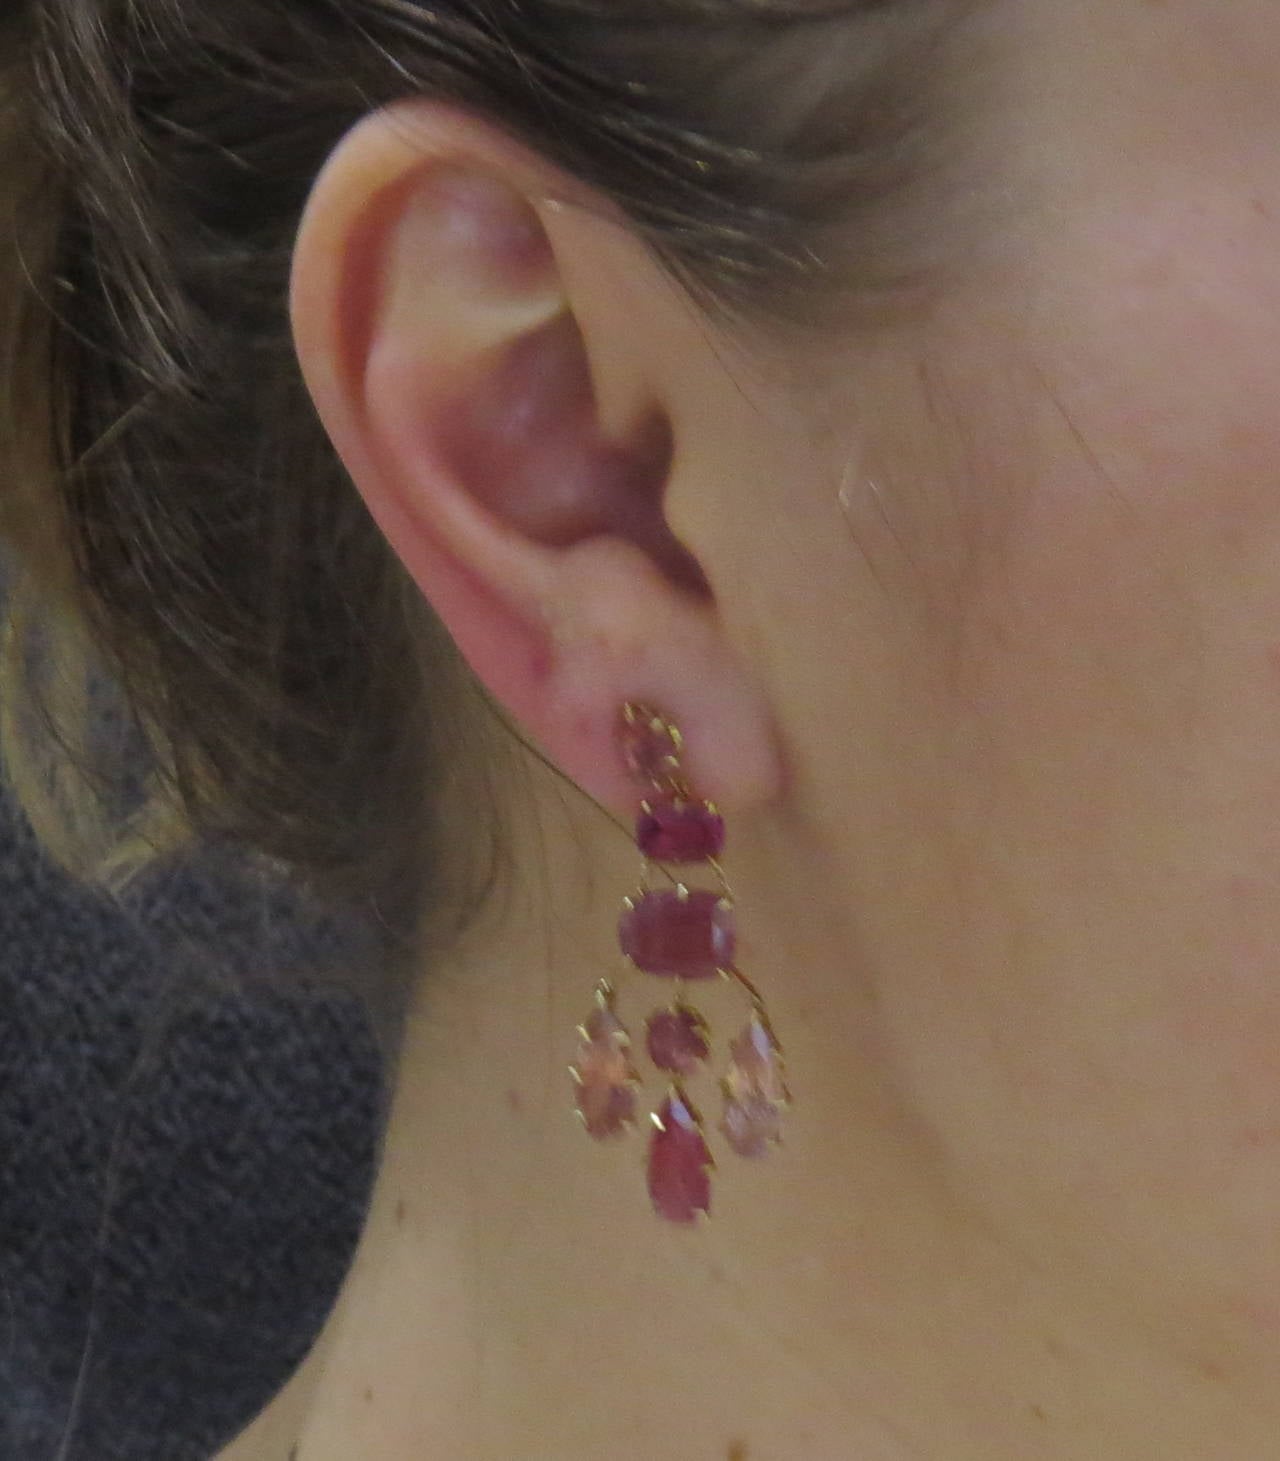 H. Stern Pink Tourmaline Gold Drop Earrings